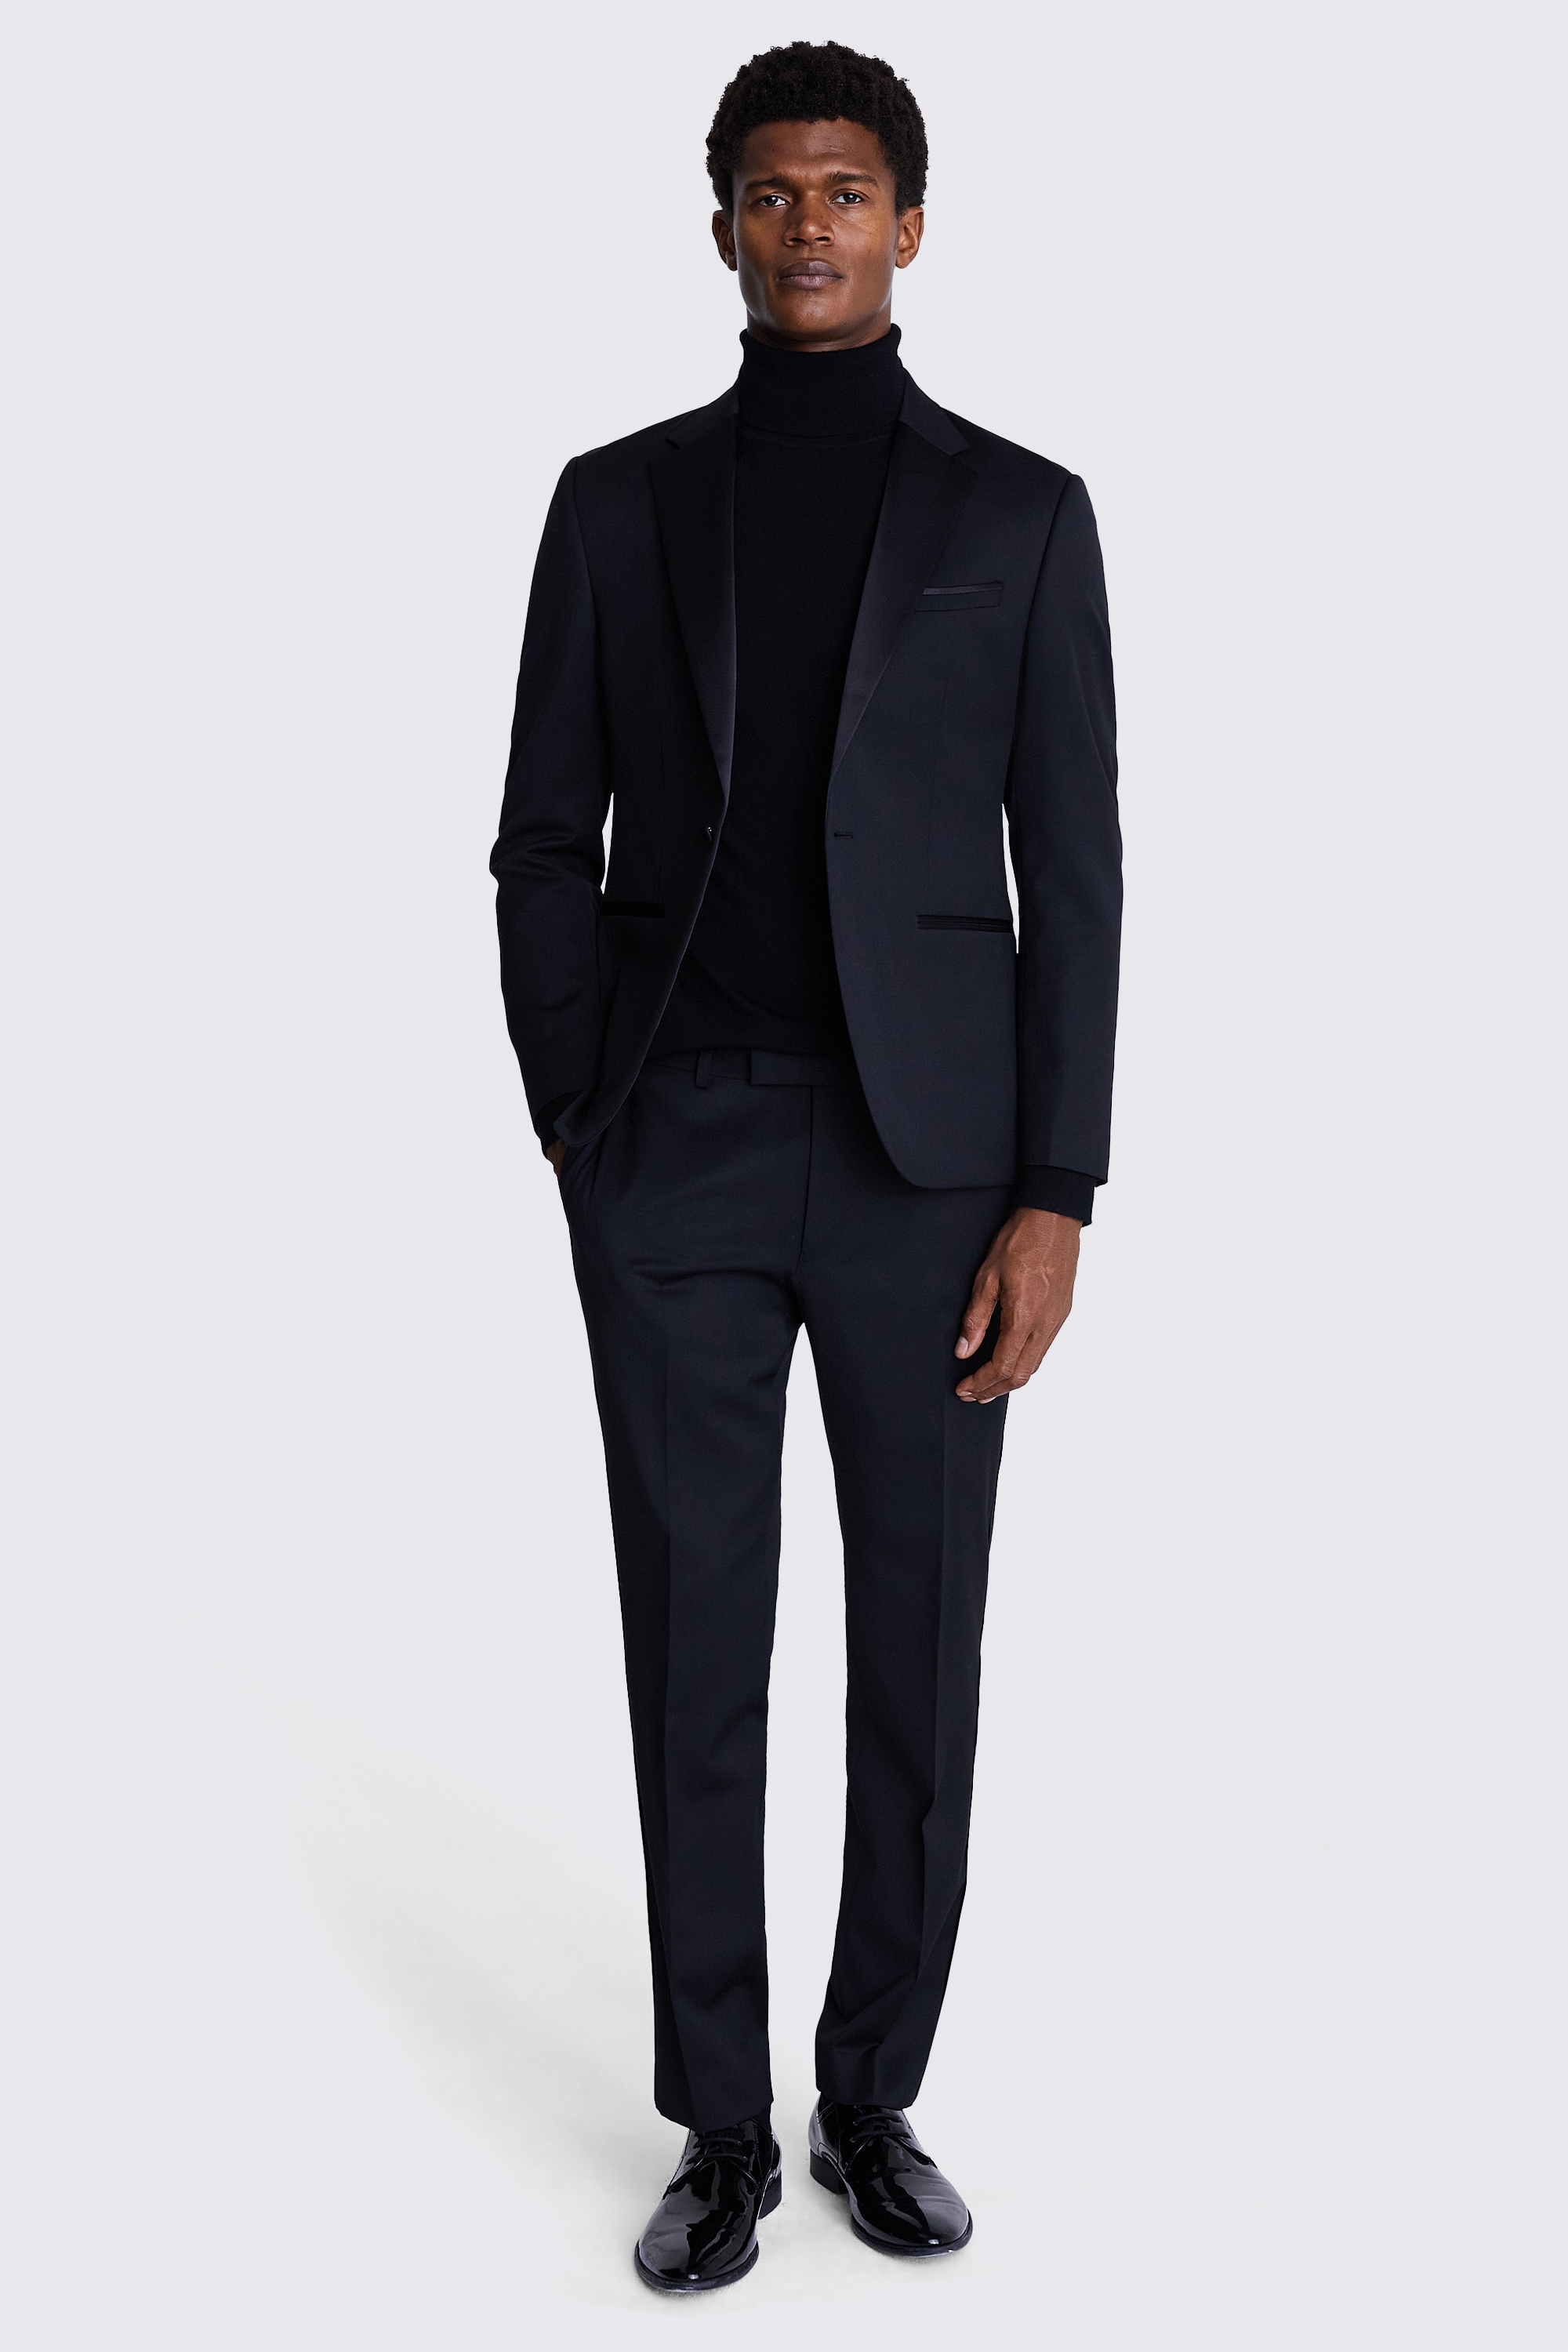 DKNY Slim Fit Black Notch Lapel Tuxedo Jacket | Buy Online at Moss